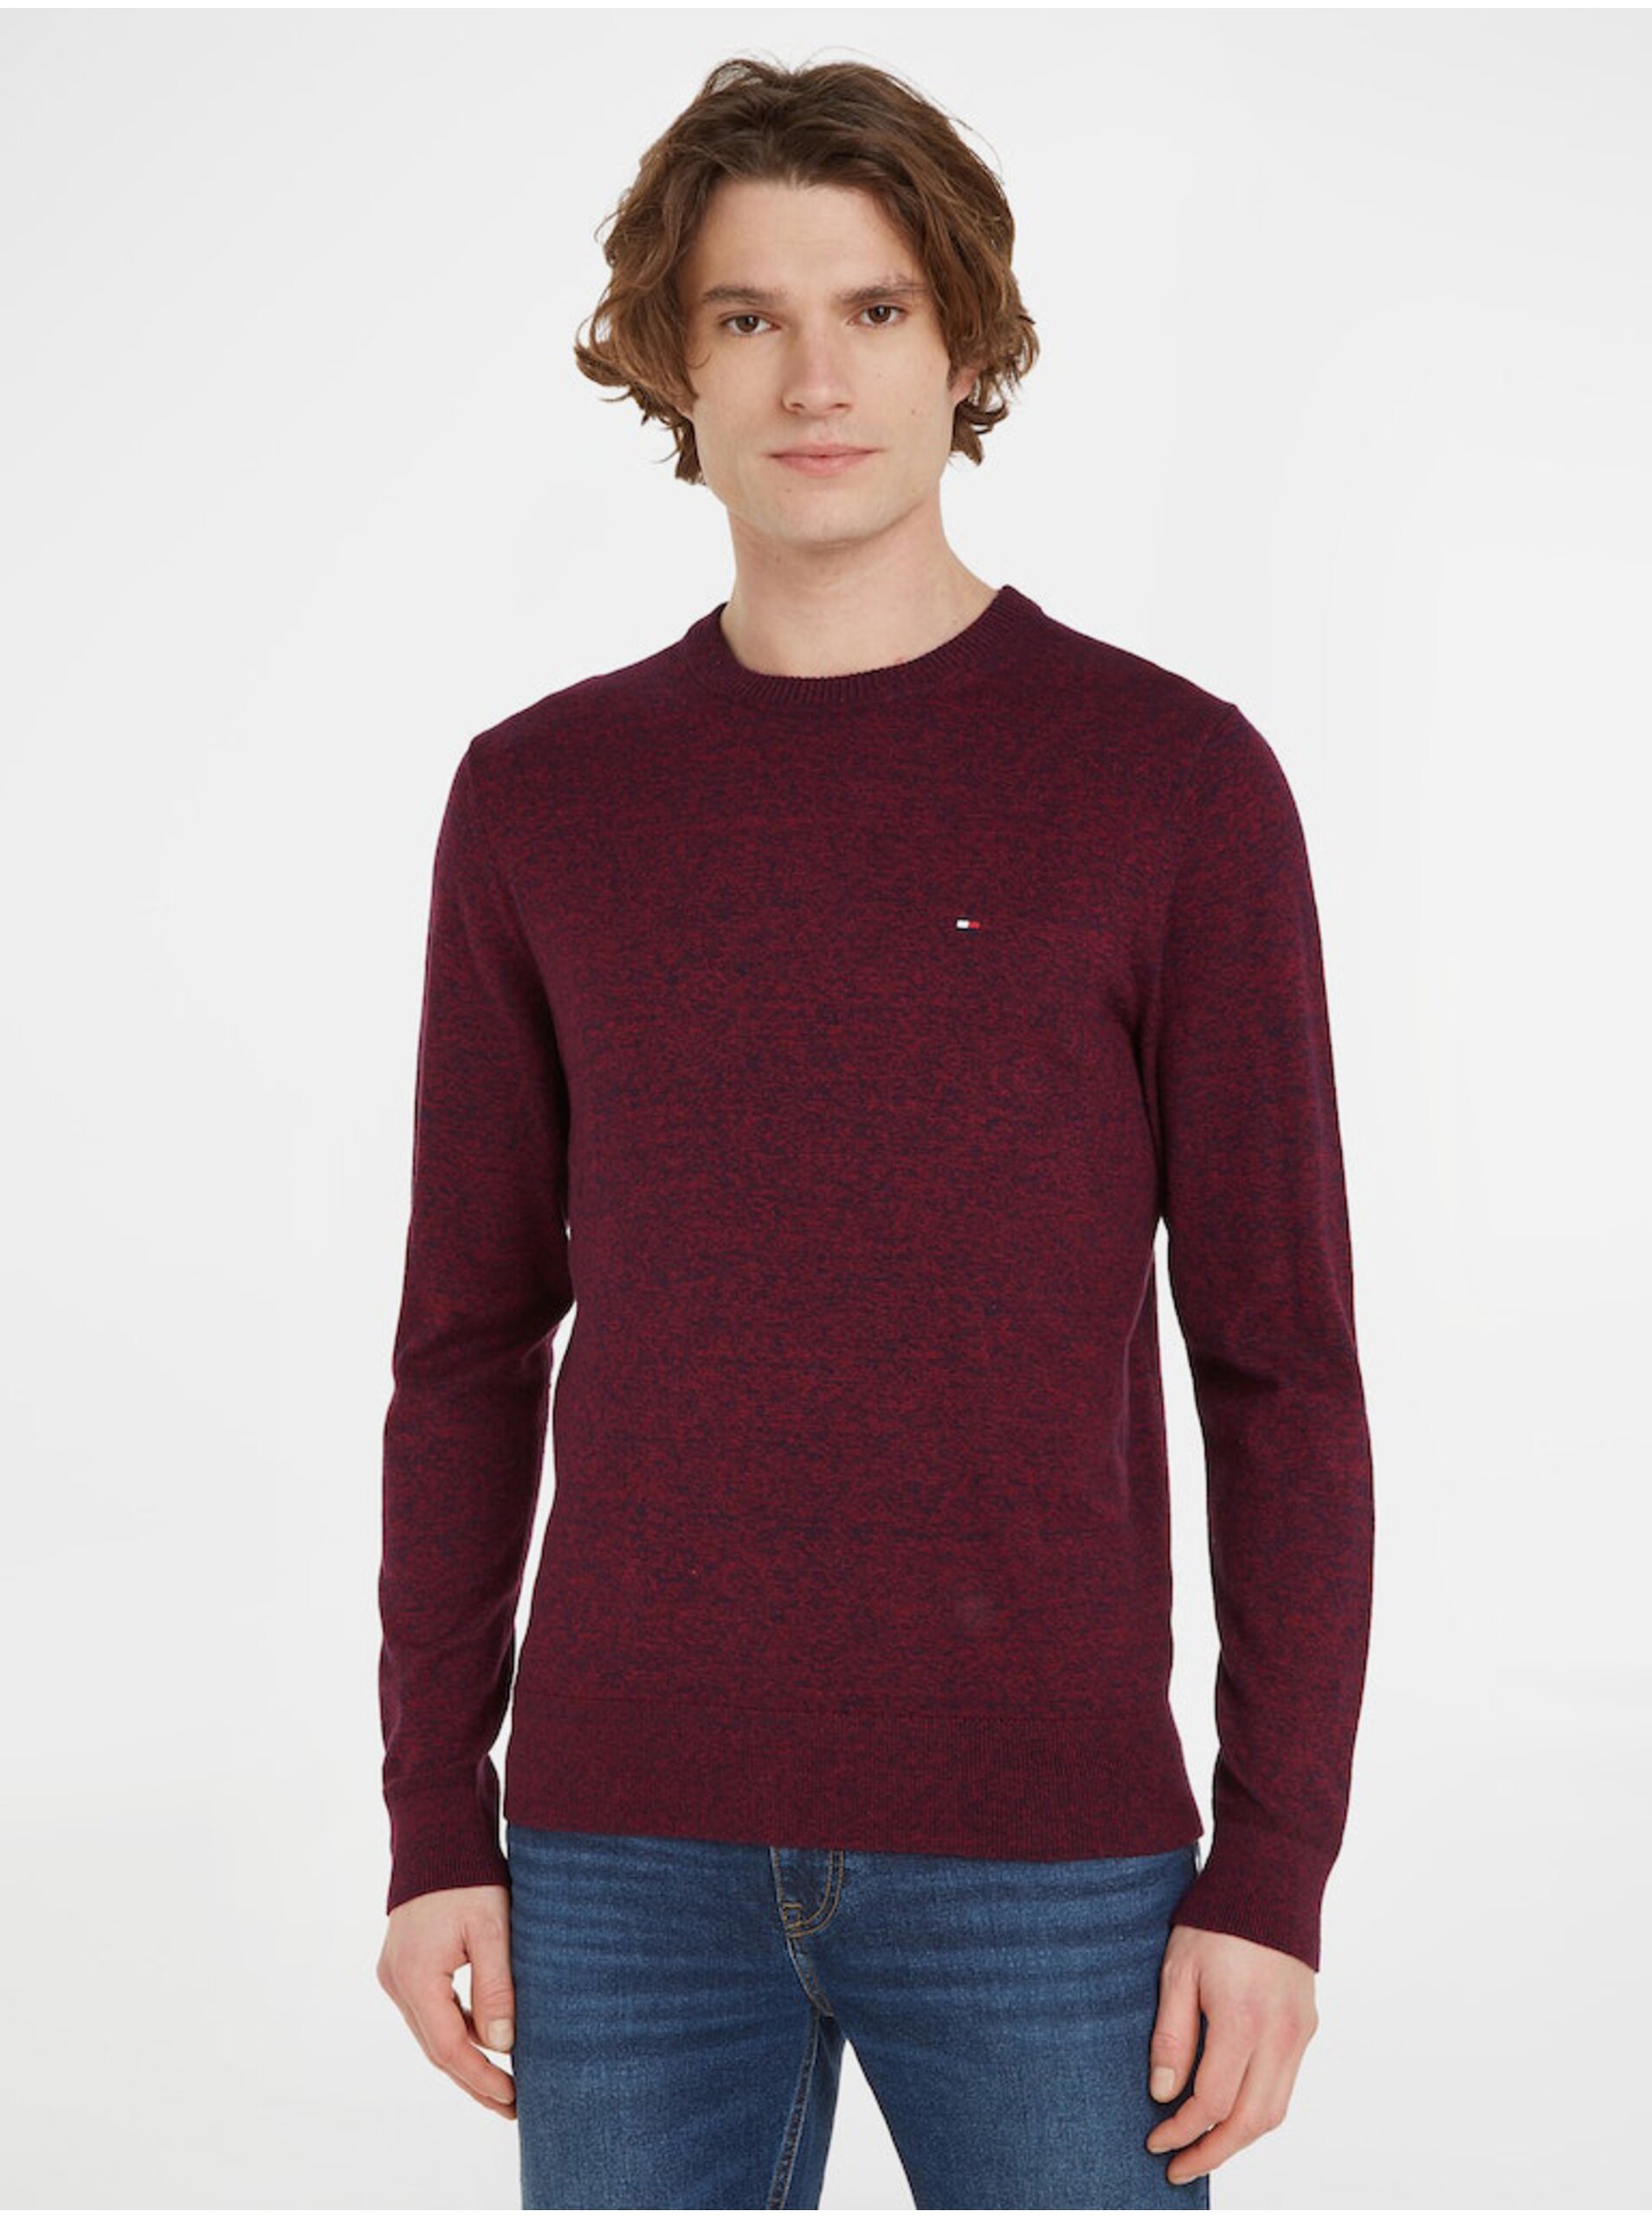 Lacno Vínový pánsky sveter s prímesou kašmíru Tommy Hilfiger